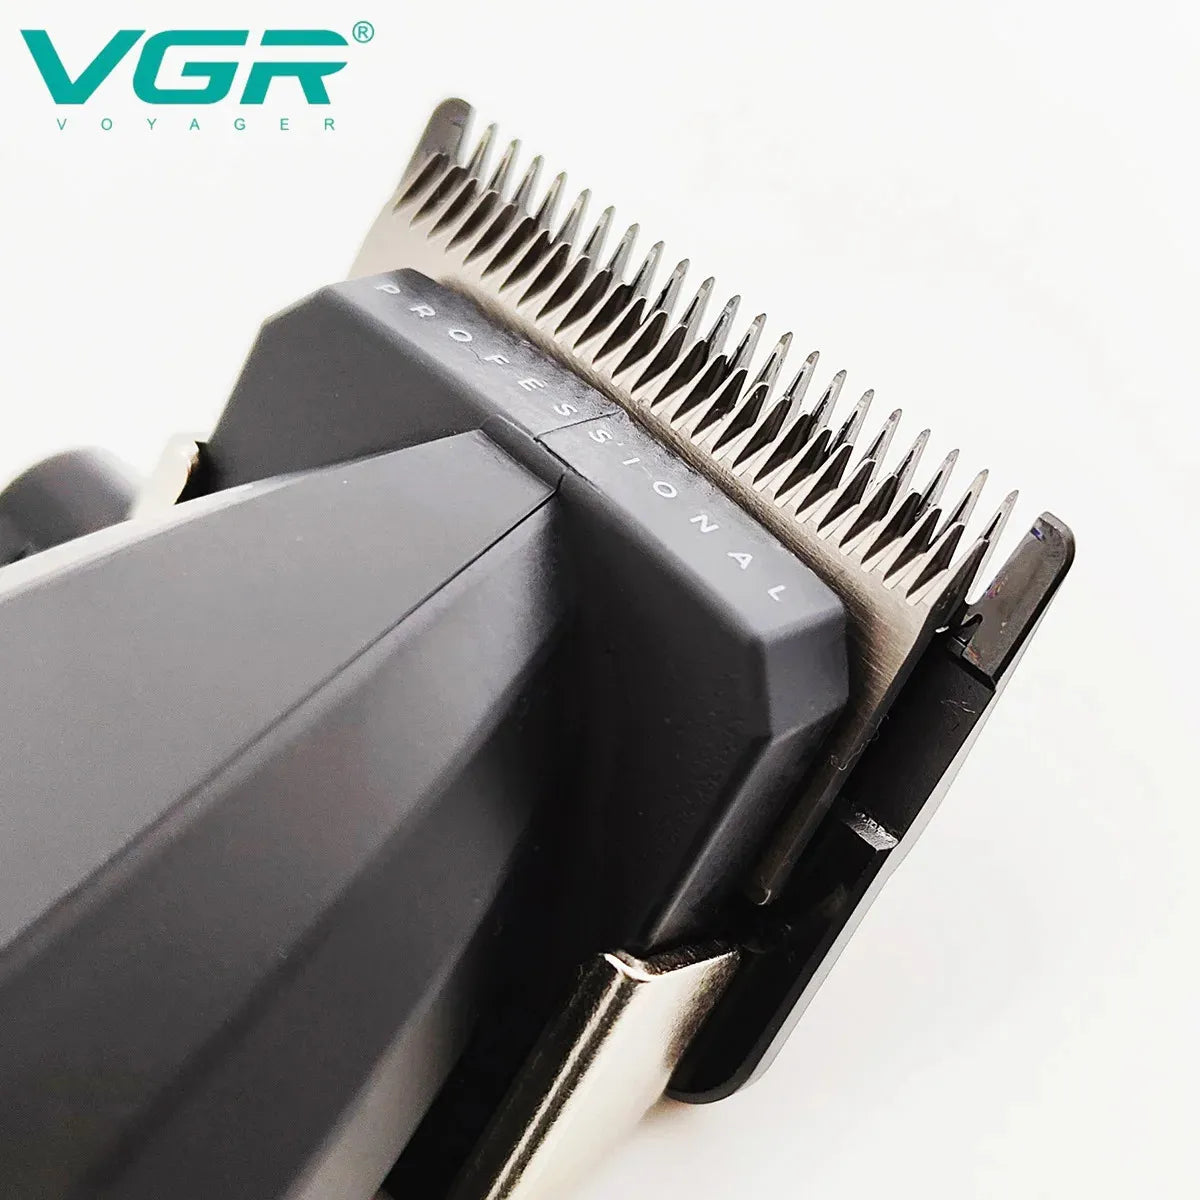 VGR V003 Wireless Electric Clipper 9000rpm Salon Engraving Men's Shaving